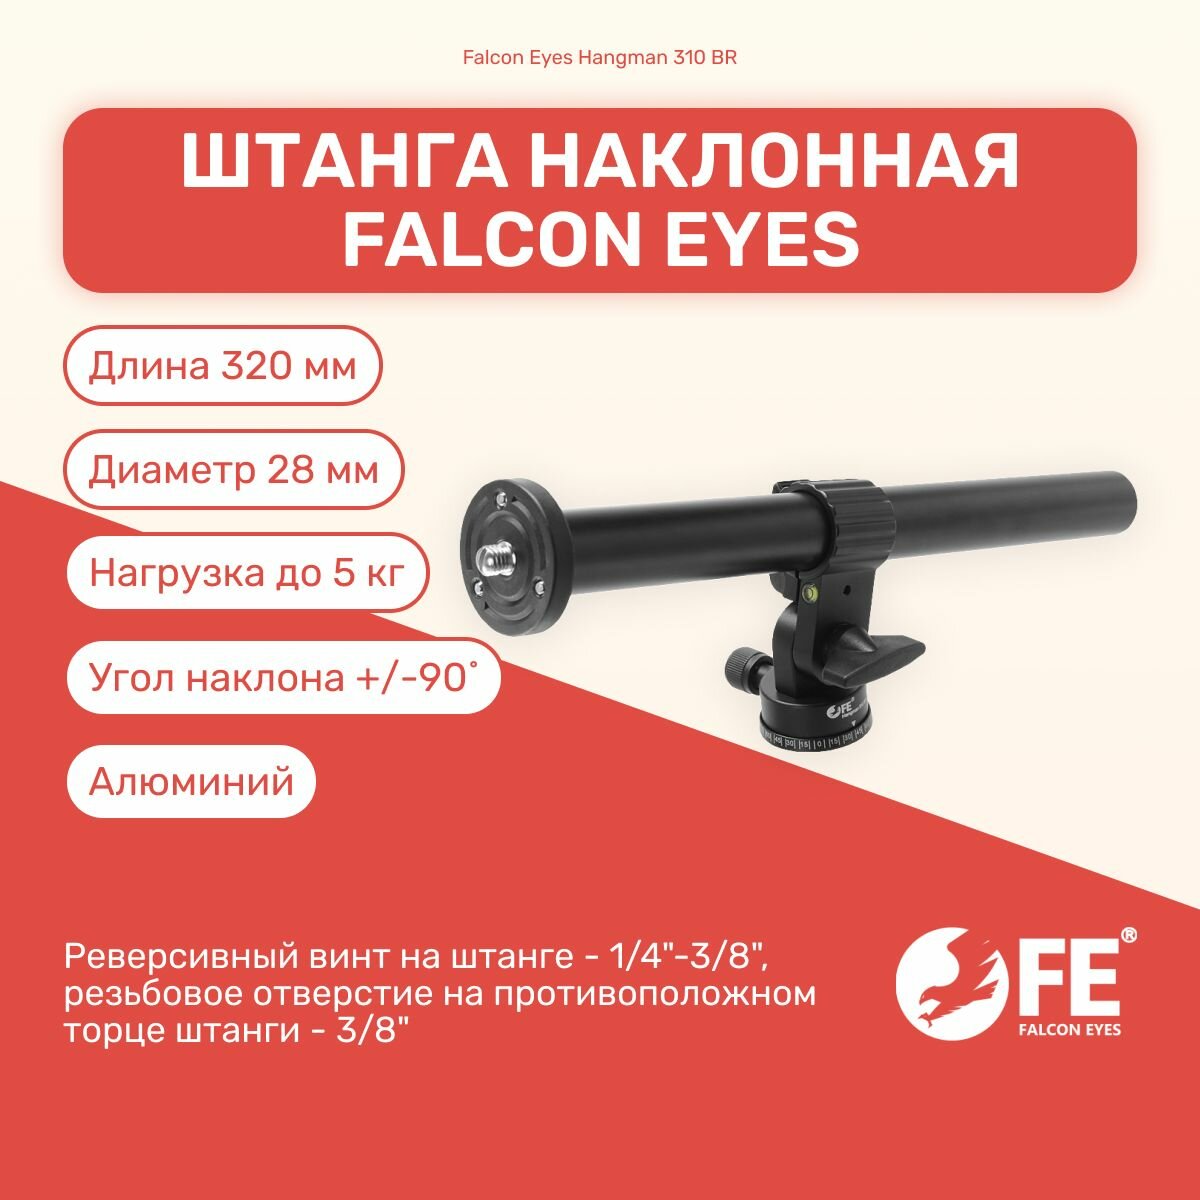 Штанга наклонная Falcon Eyes Hangman 310 BR для штатива, оборудование для фото и видео съемок